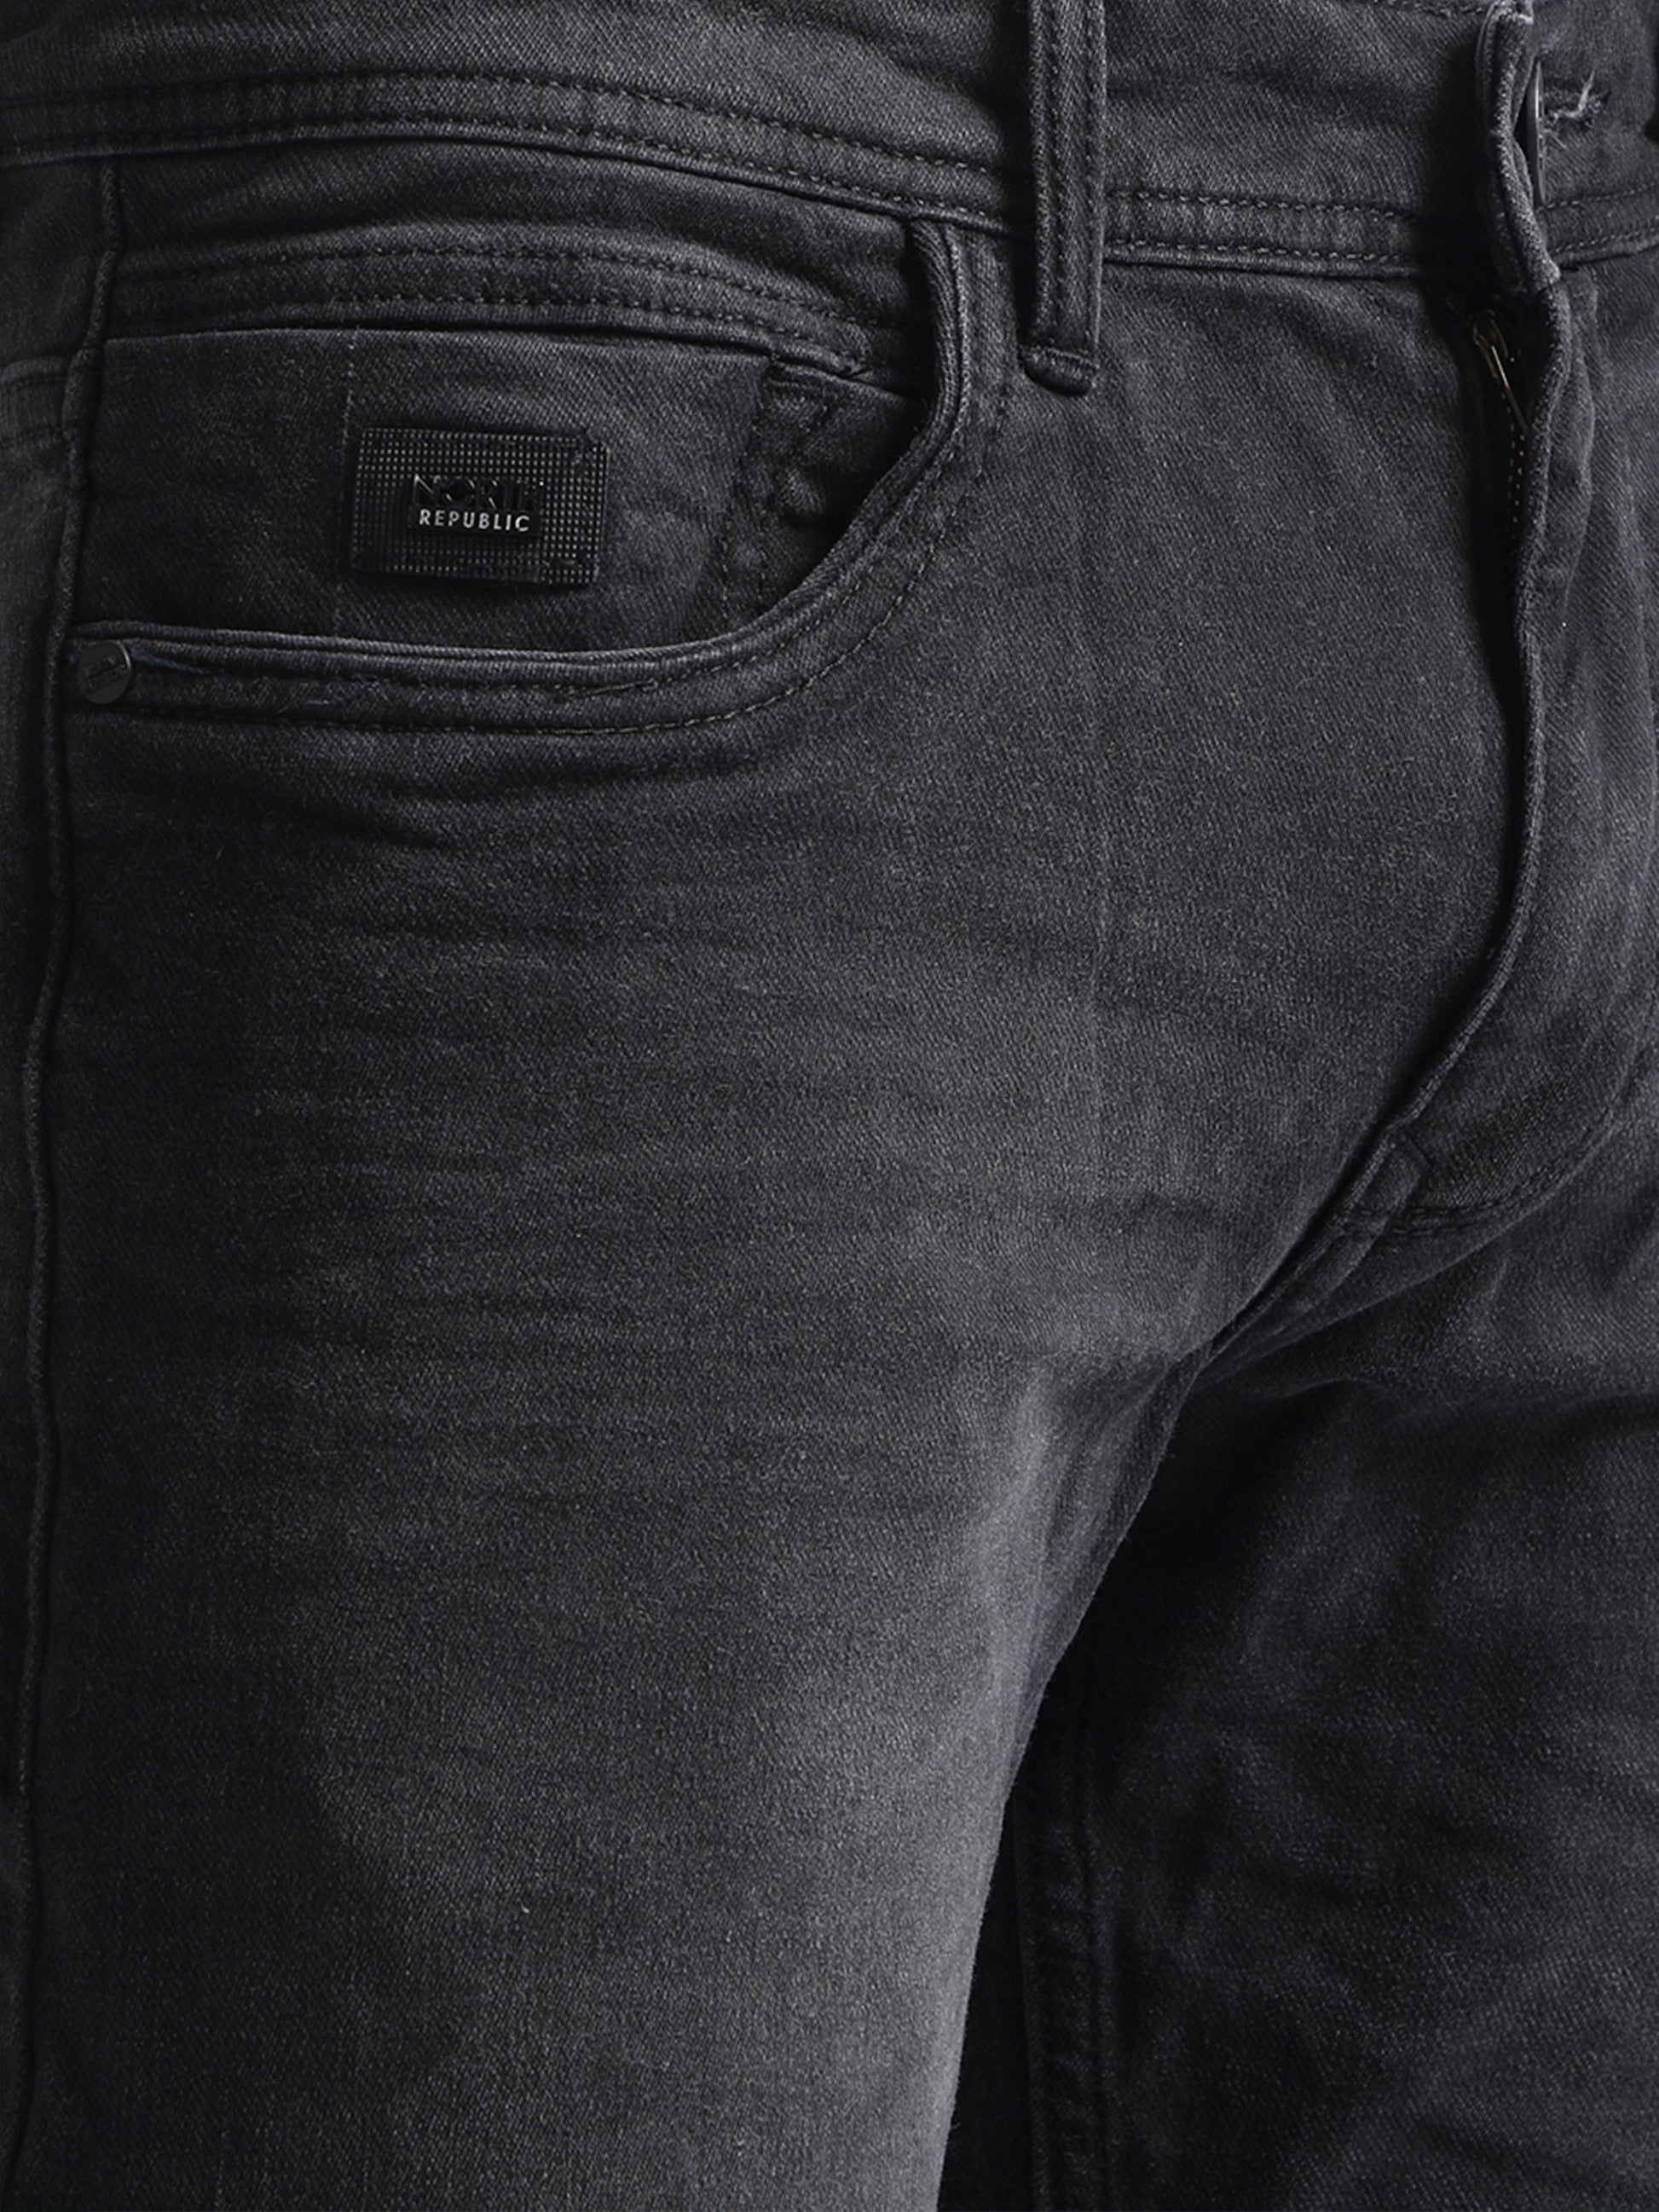 Black Men's Faded Wash Denim Jeans